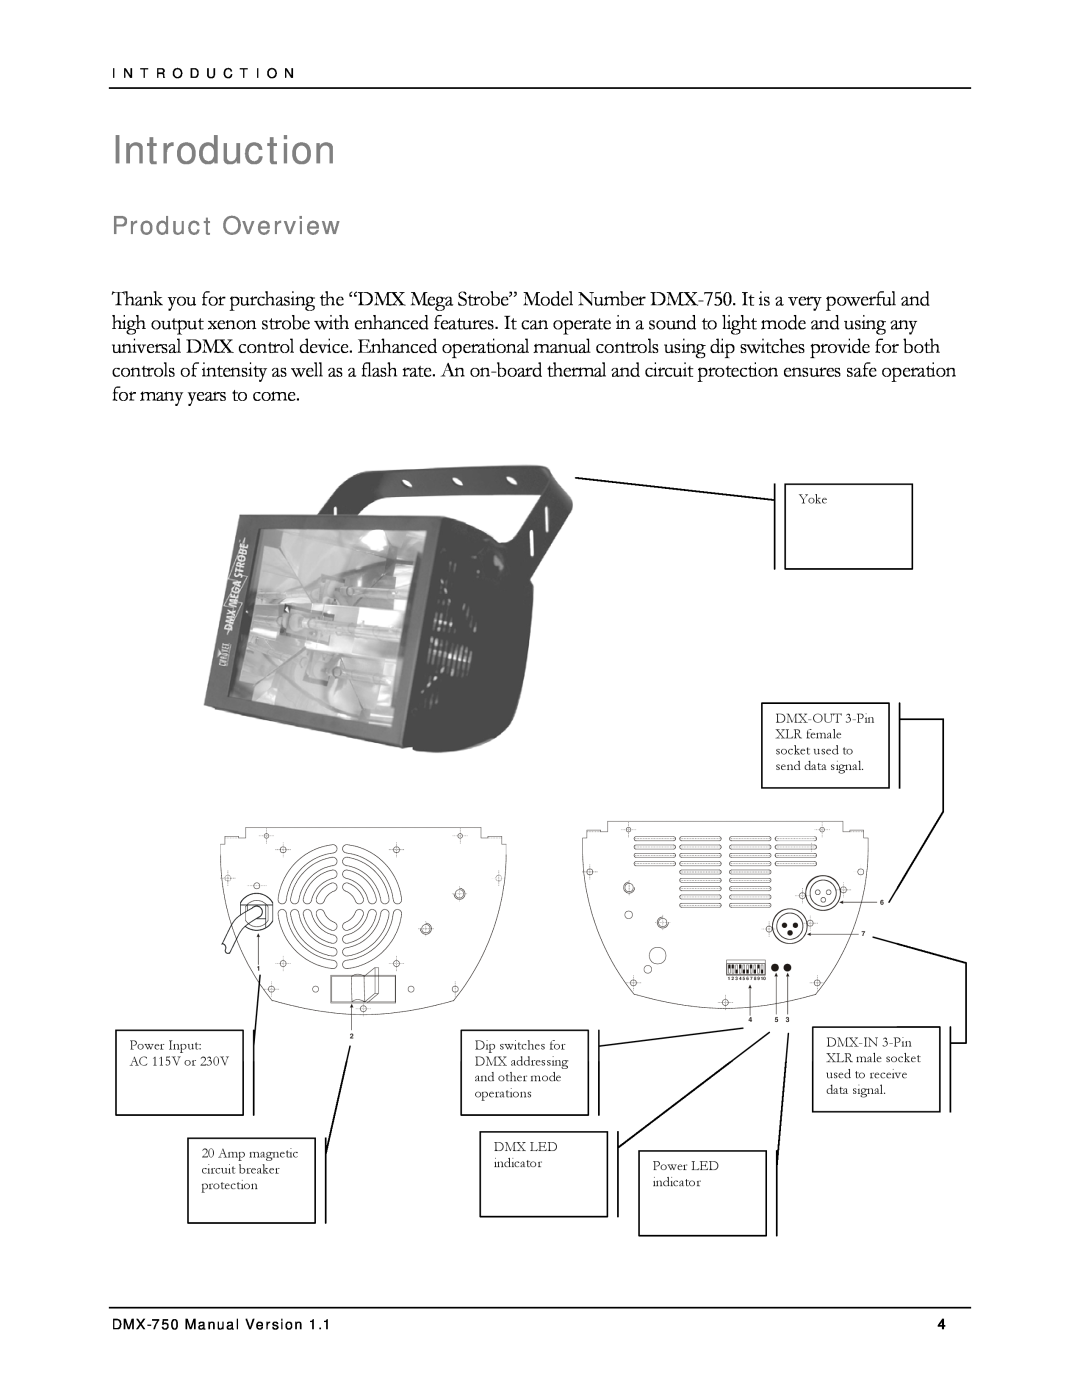 Chauvet DMX-750 manual Introduction, Product Overview 